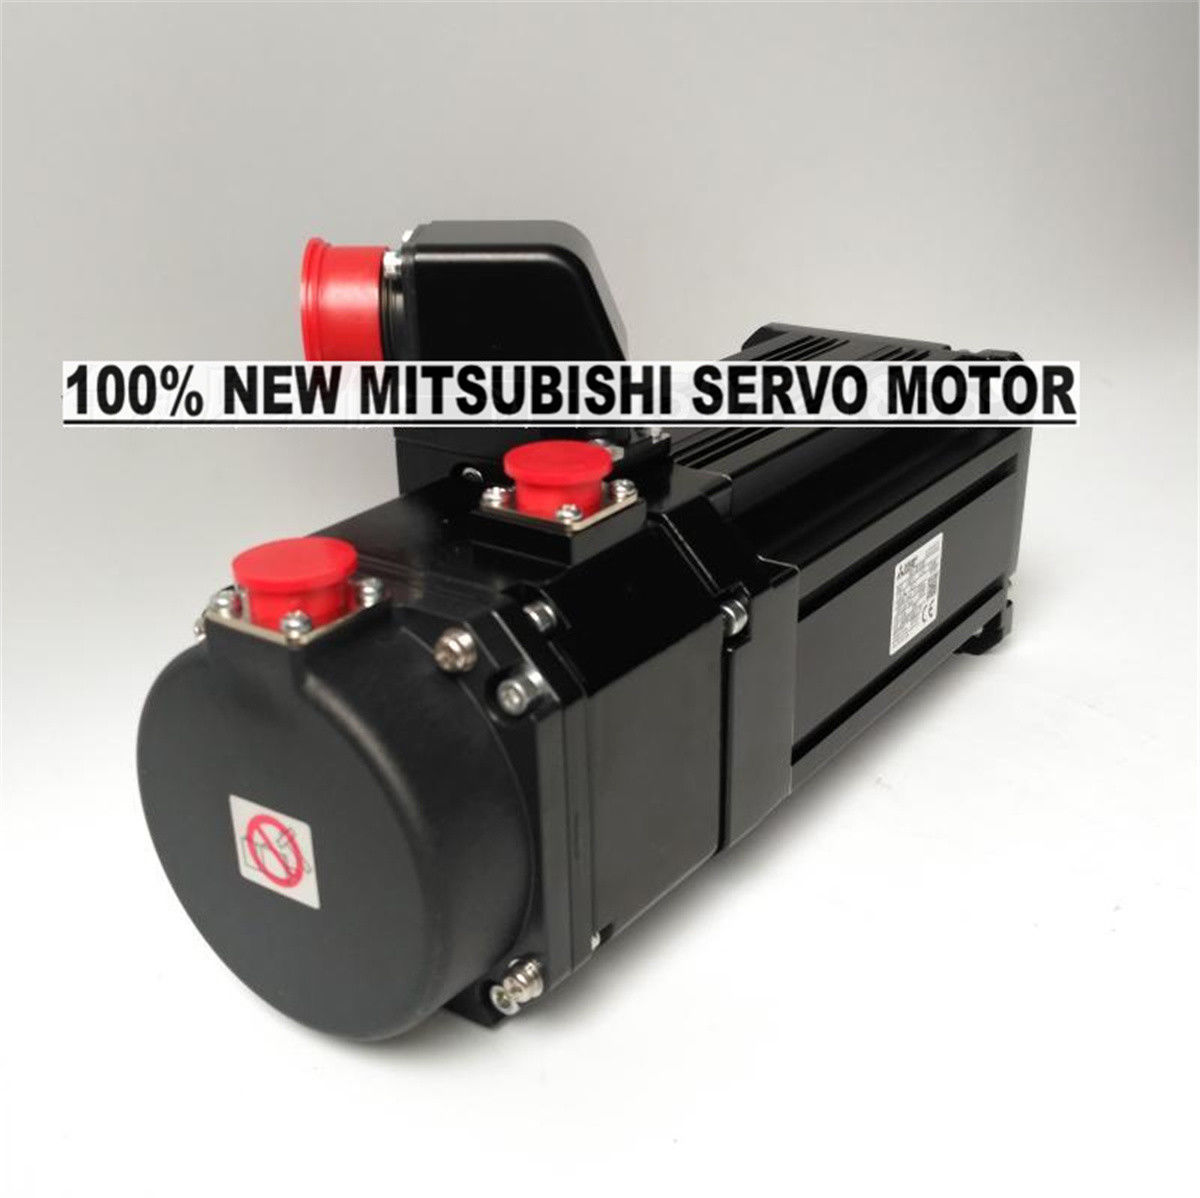 Brand NEW Mitsubishi Servo Motor HG-JR153B in box HGJR153B - Click Image to Close